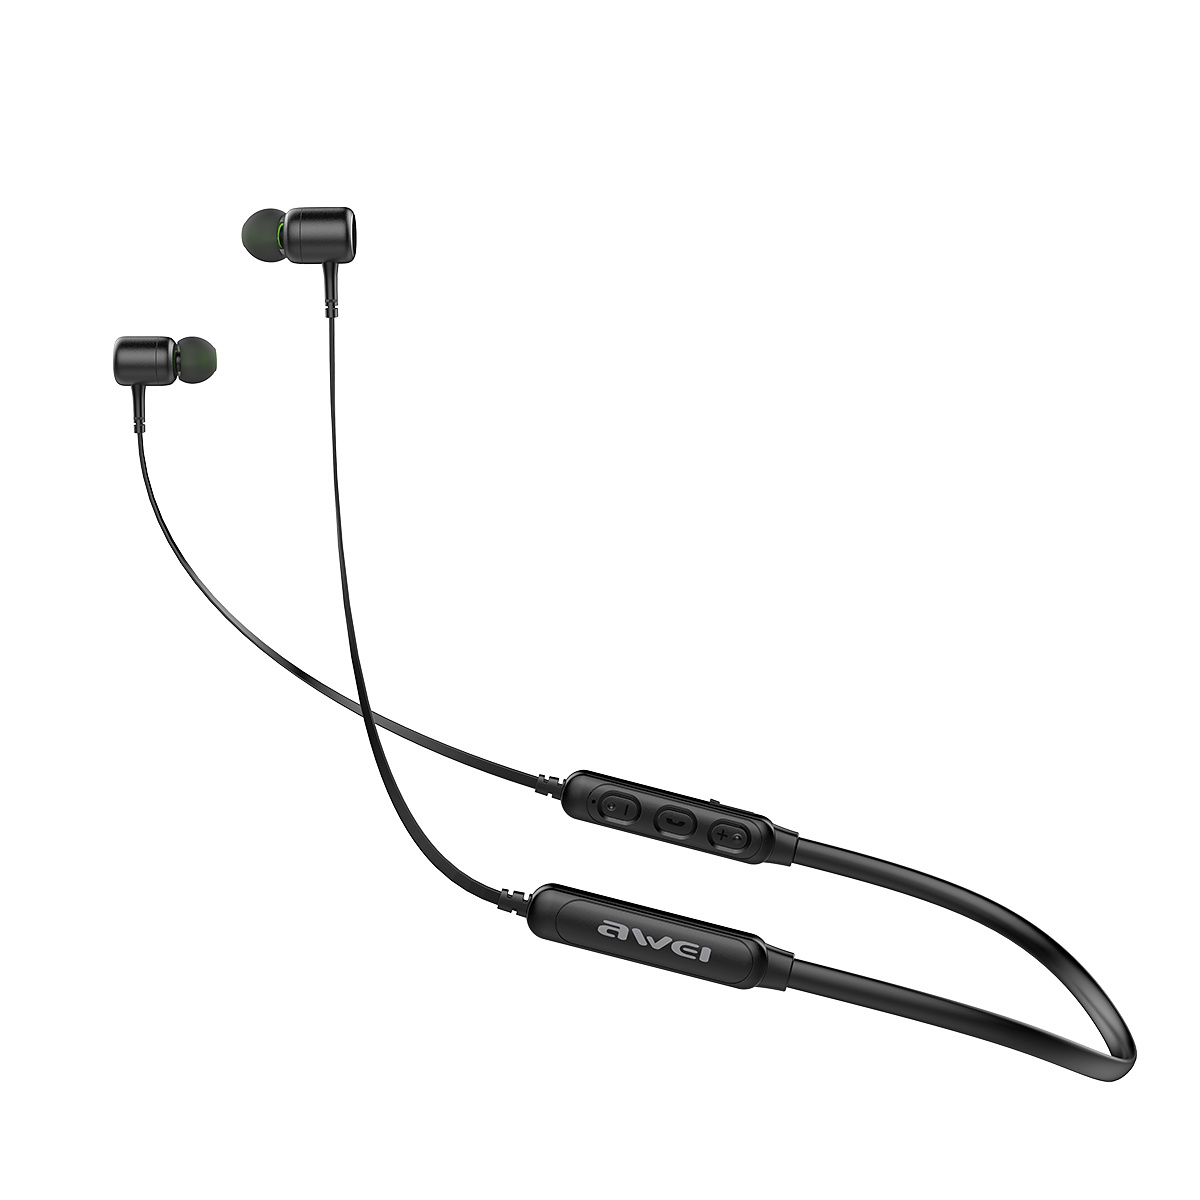 AWEI G30BL In-ear trådlösa hörlurar bluetooth med nackband